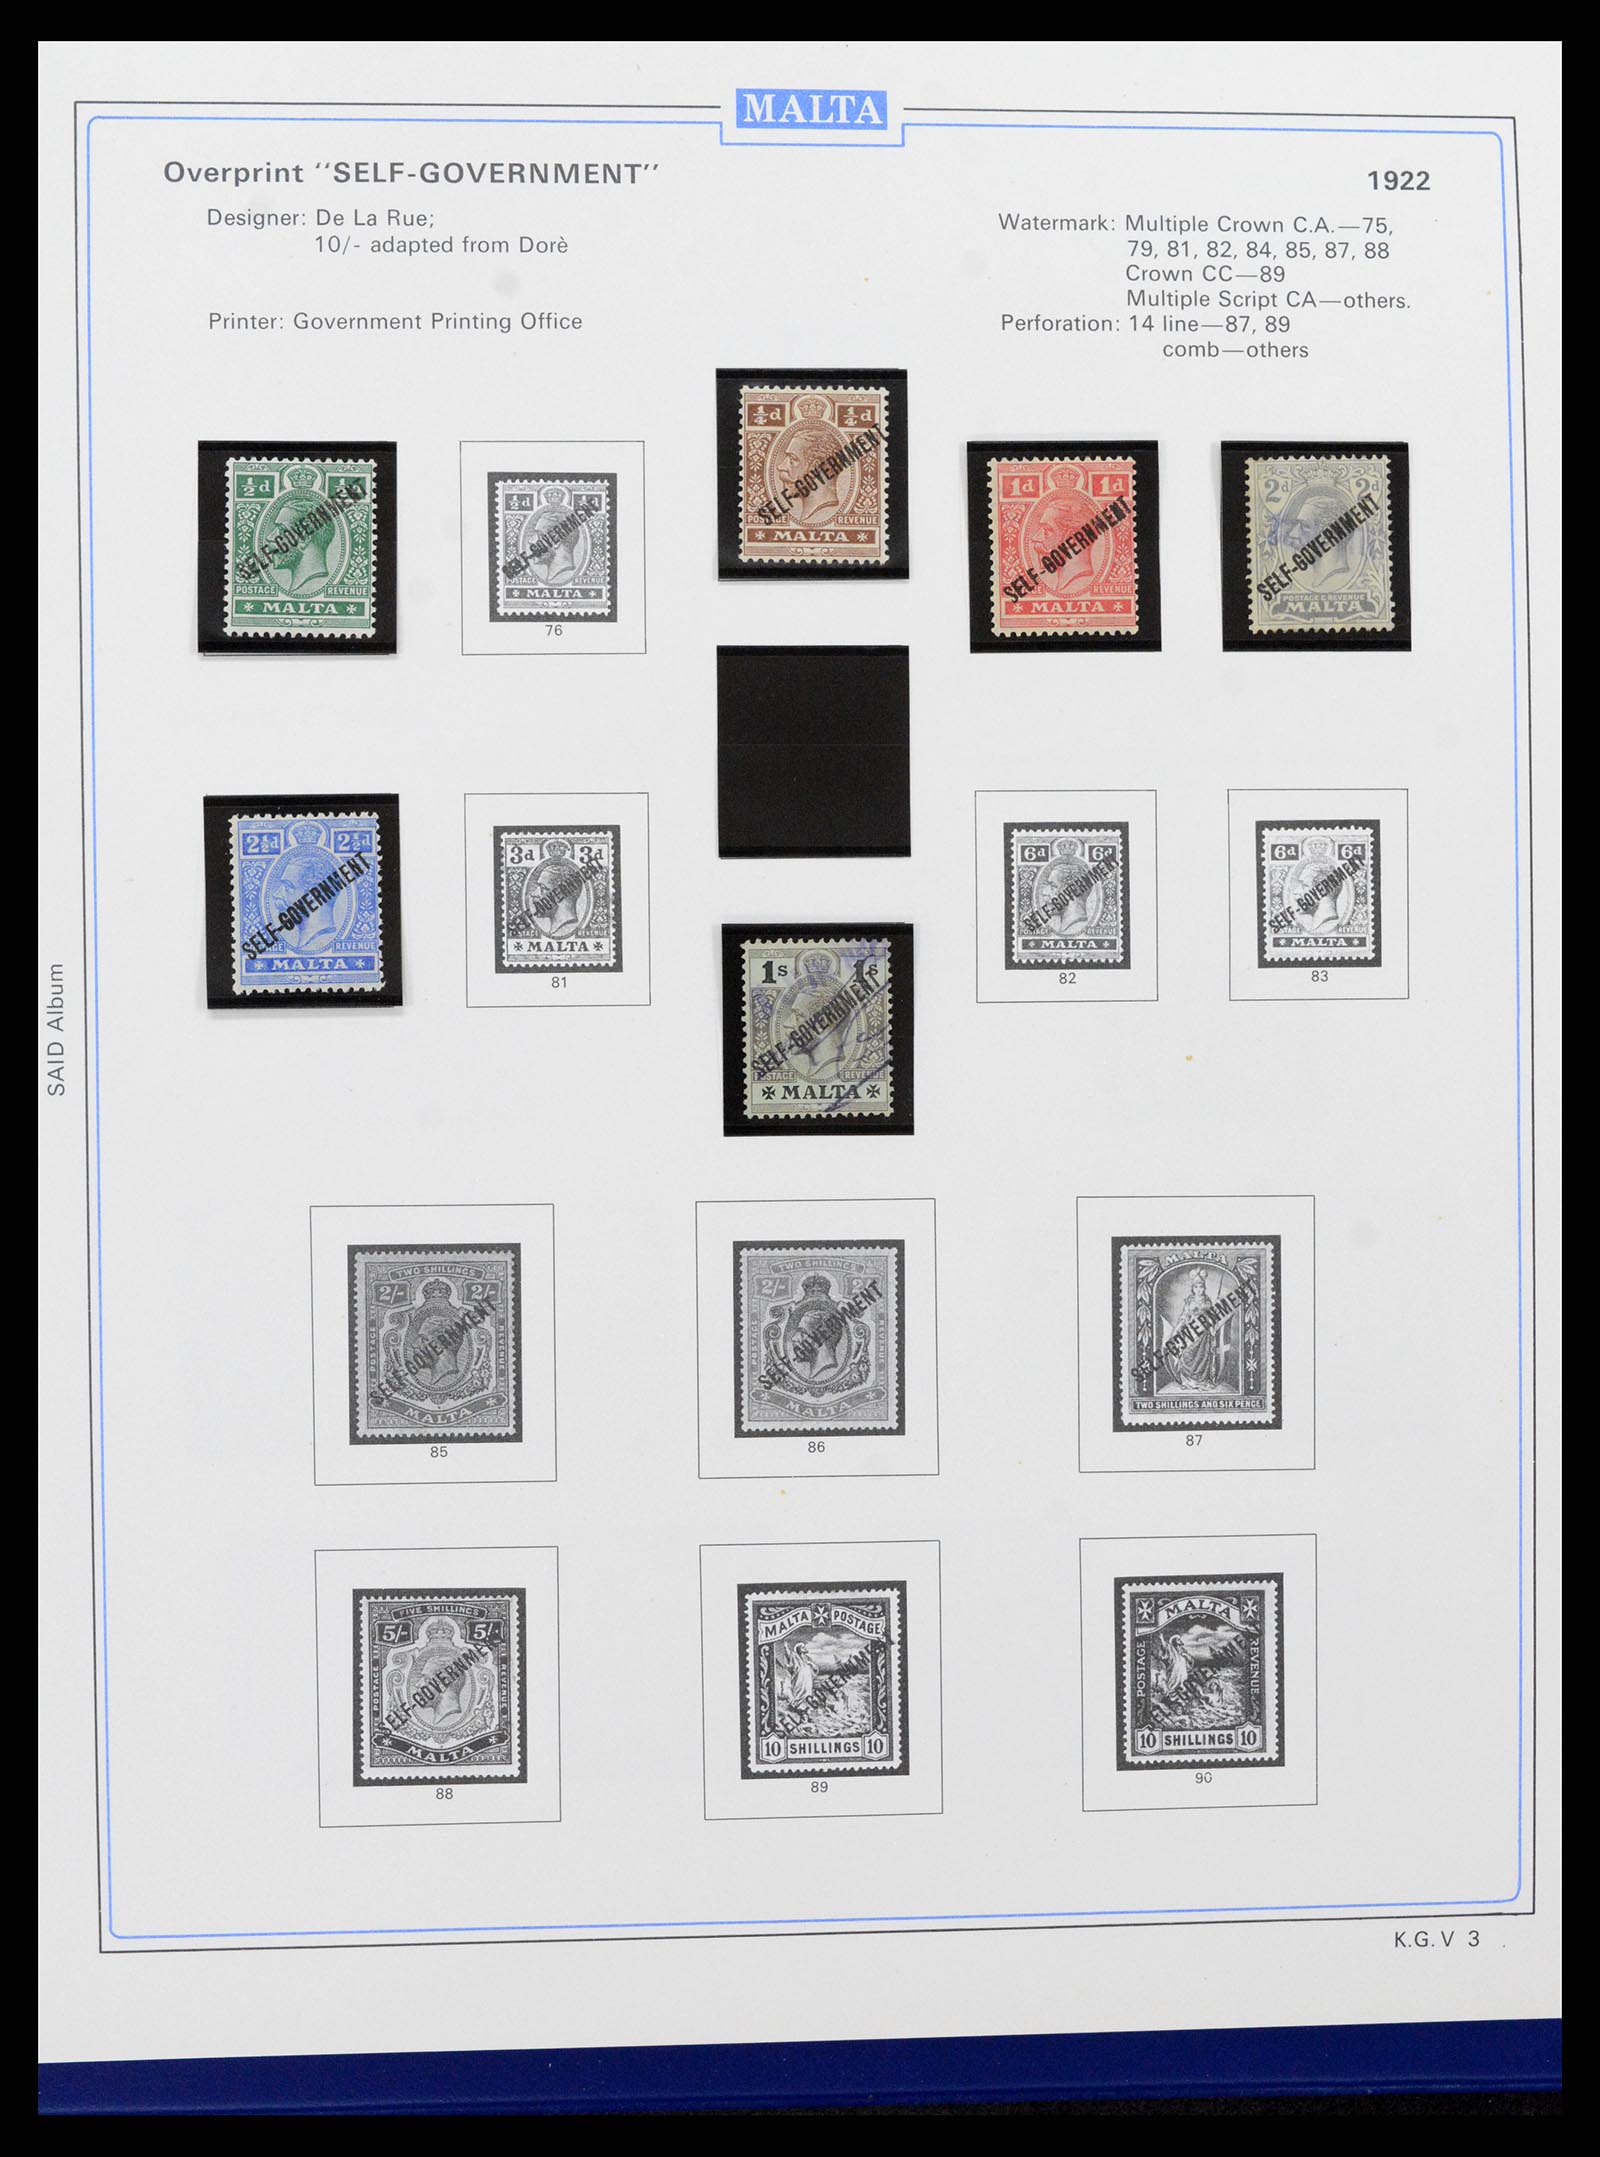 37374 007 - Stamp collection 37374 Malta 1885-2012.